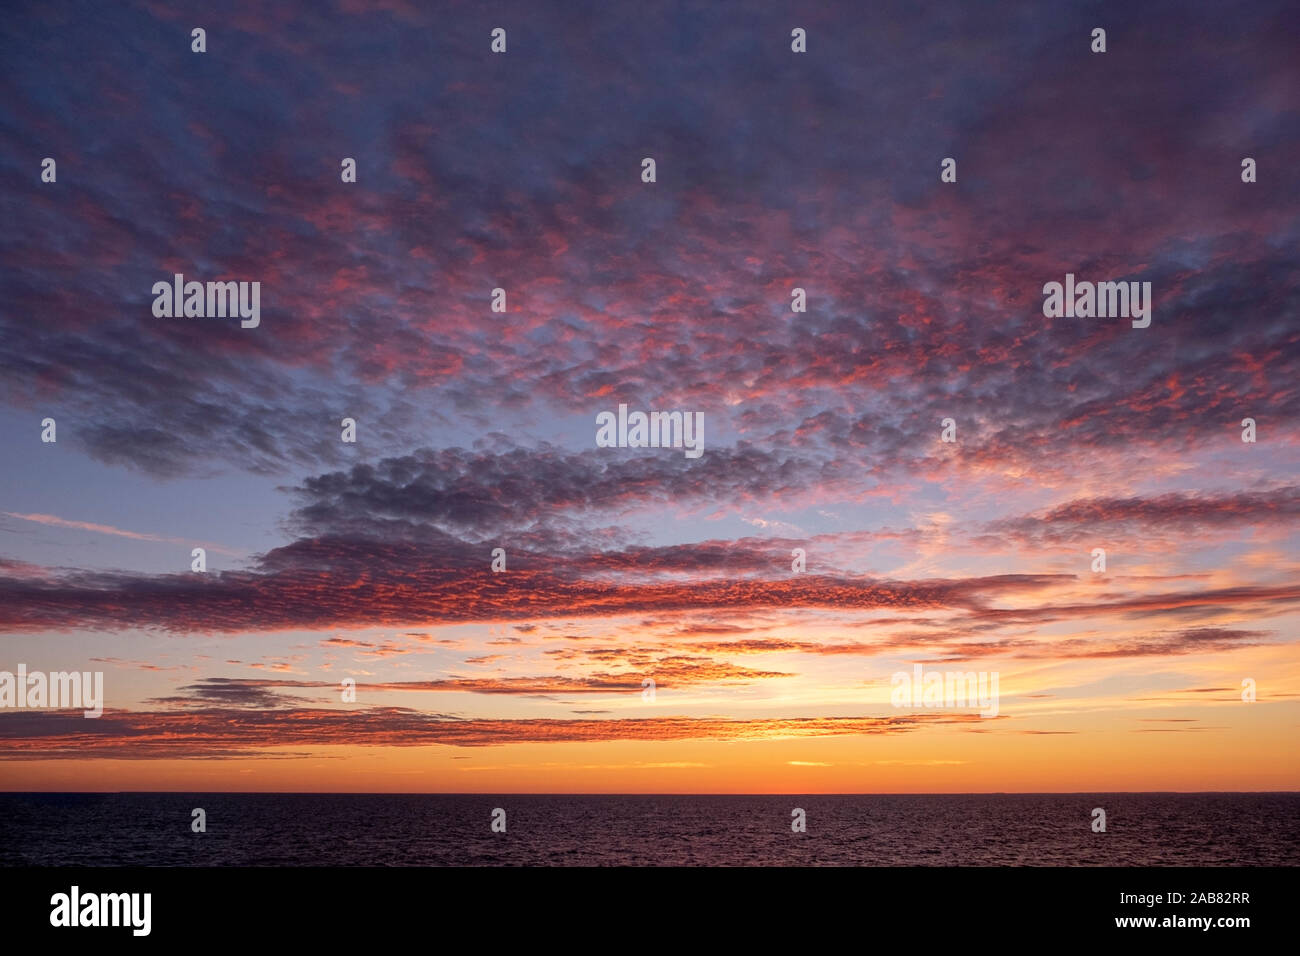 Sun setting over Baltic Sea, Atlantic Ocean, Russia, Europe Stock Photo